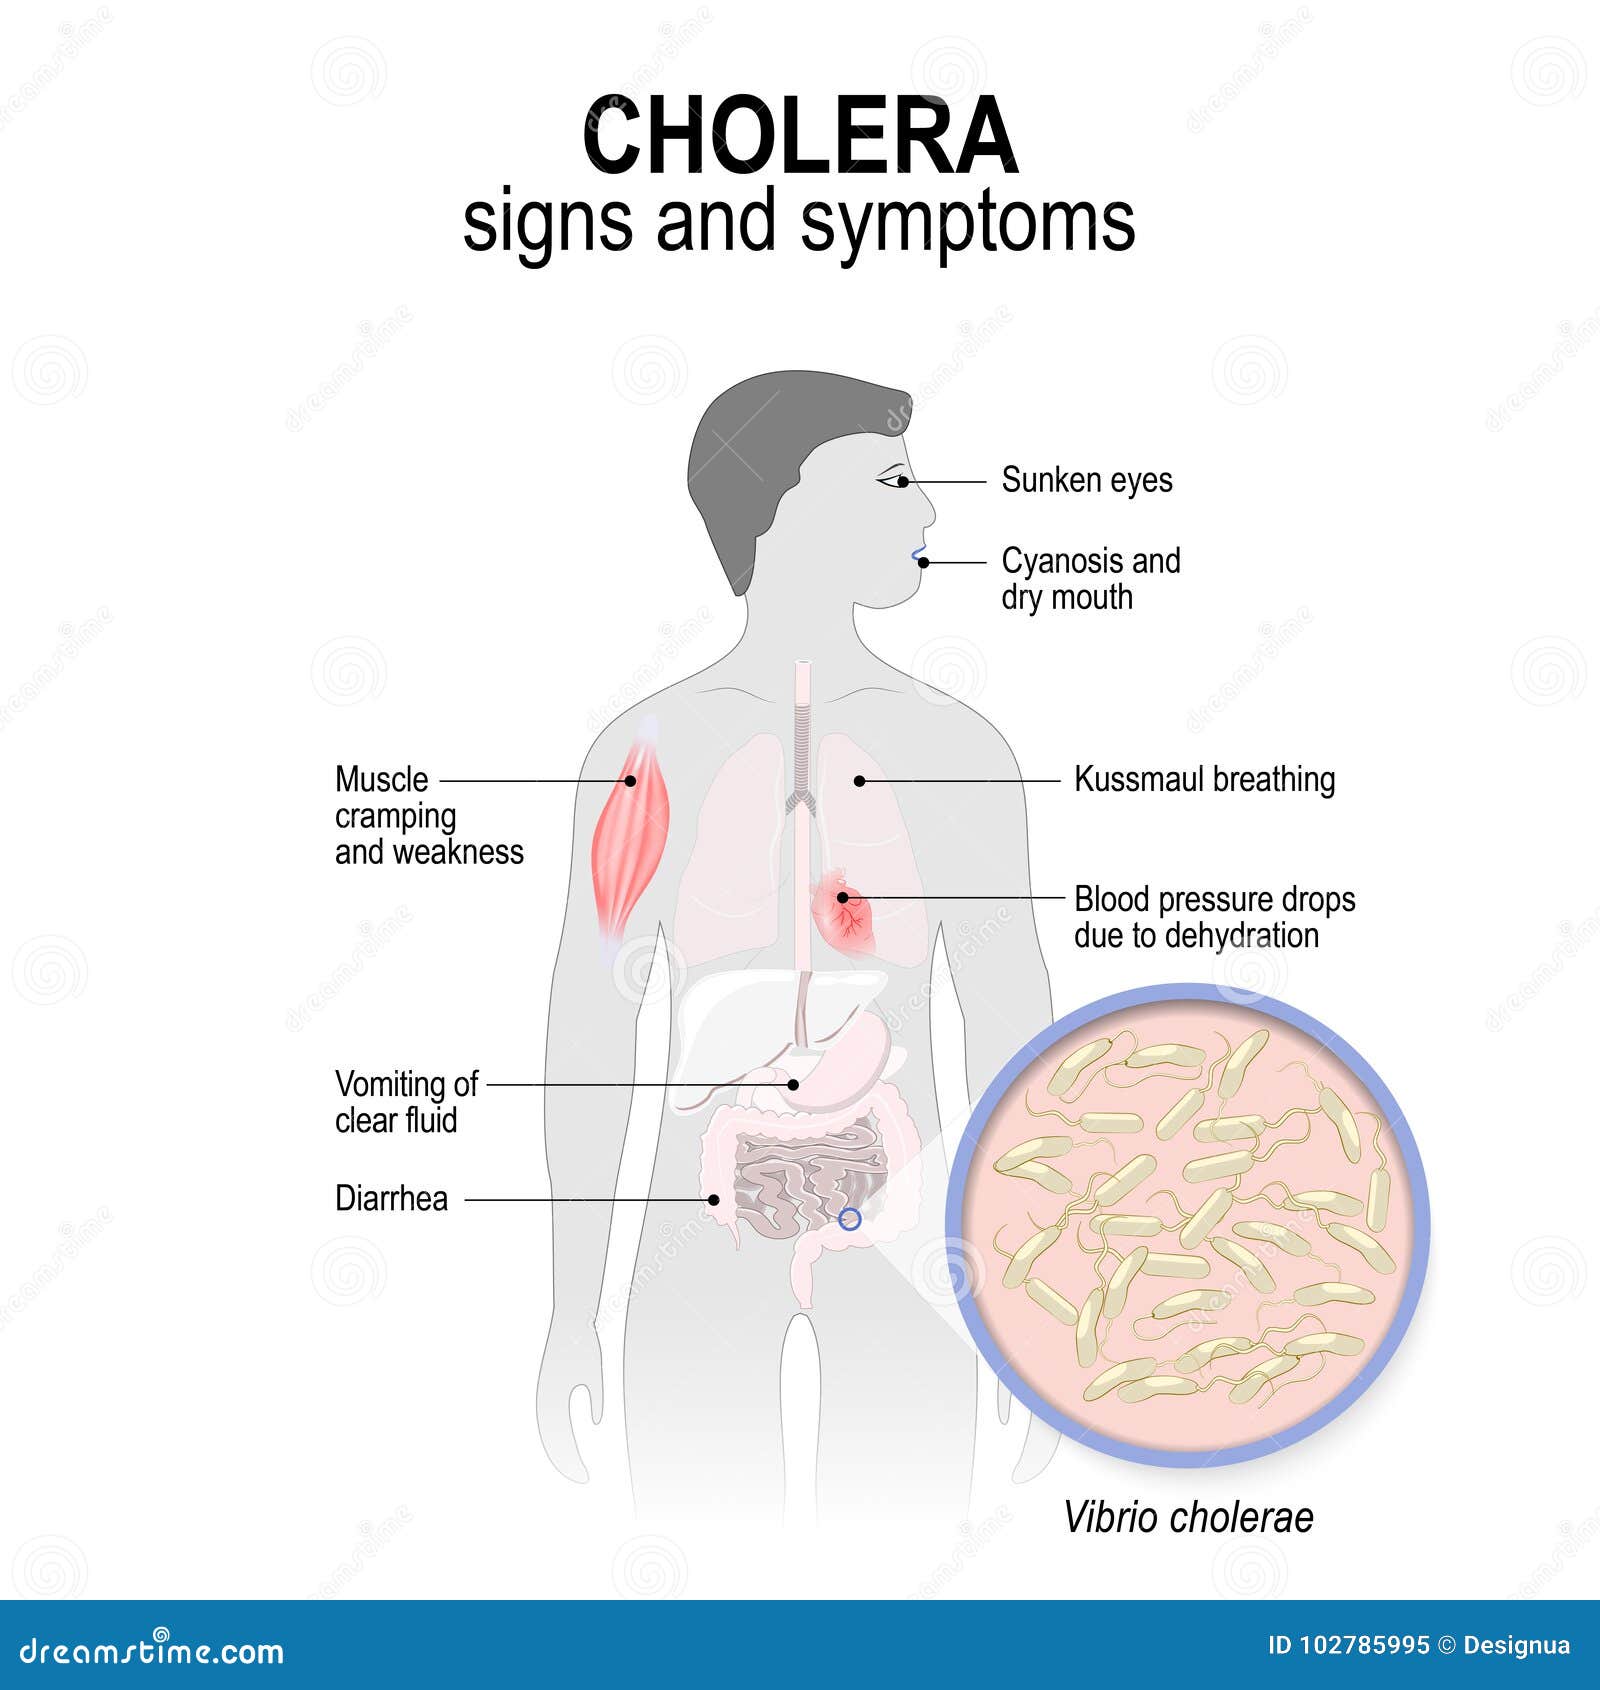 Cholera symptoms